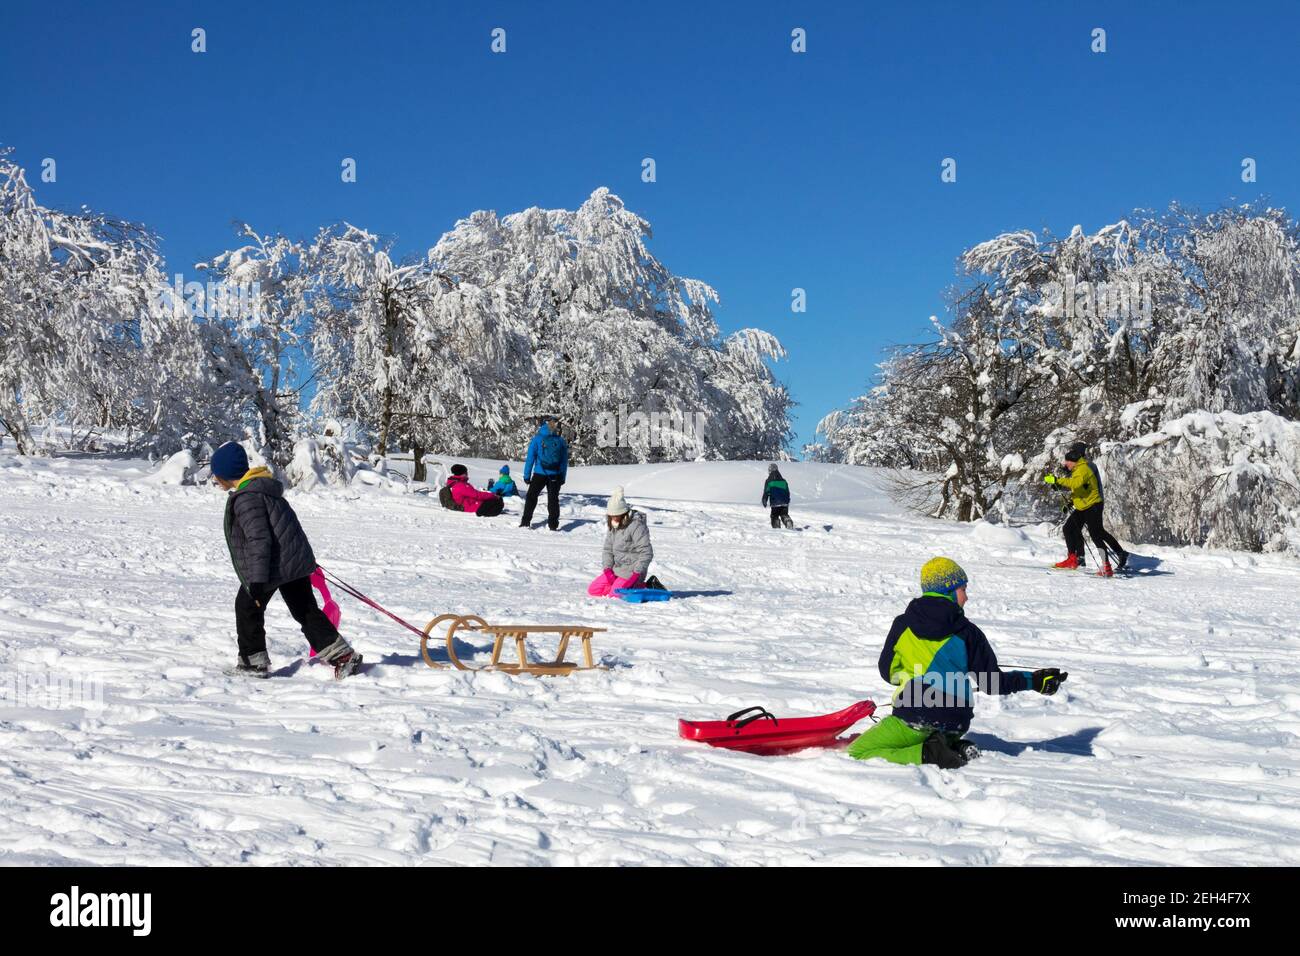 Children sledding in winter in snow enjoying sunny day Stock Photo